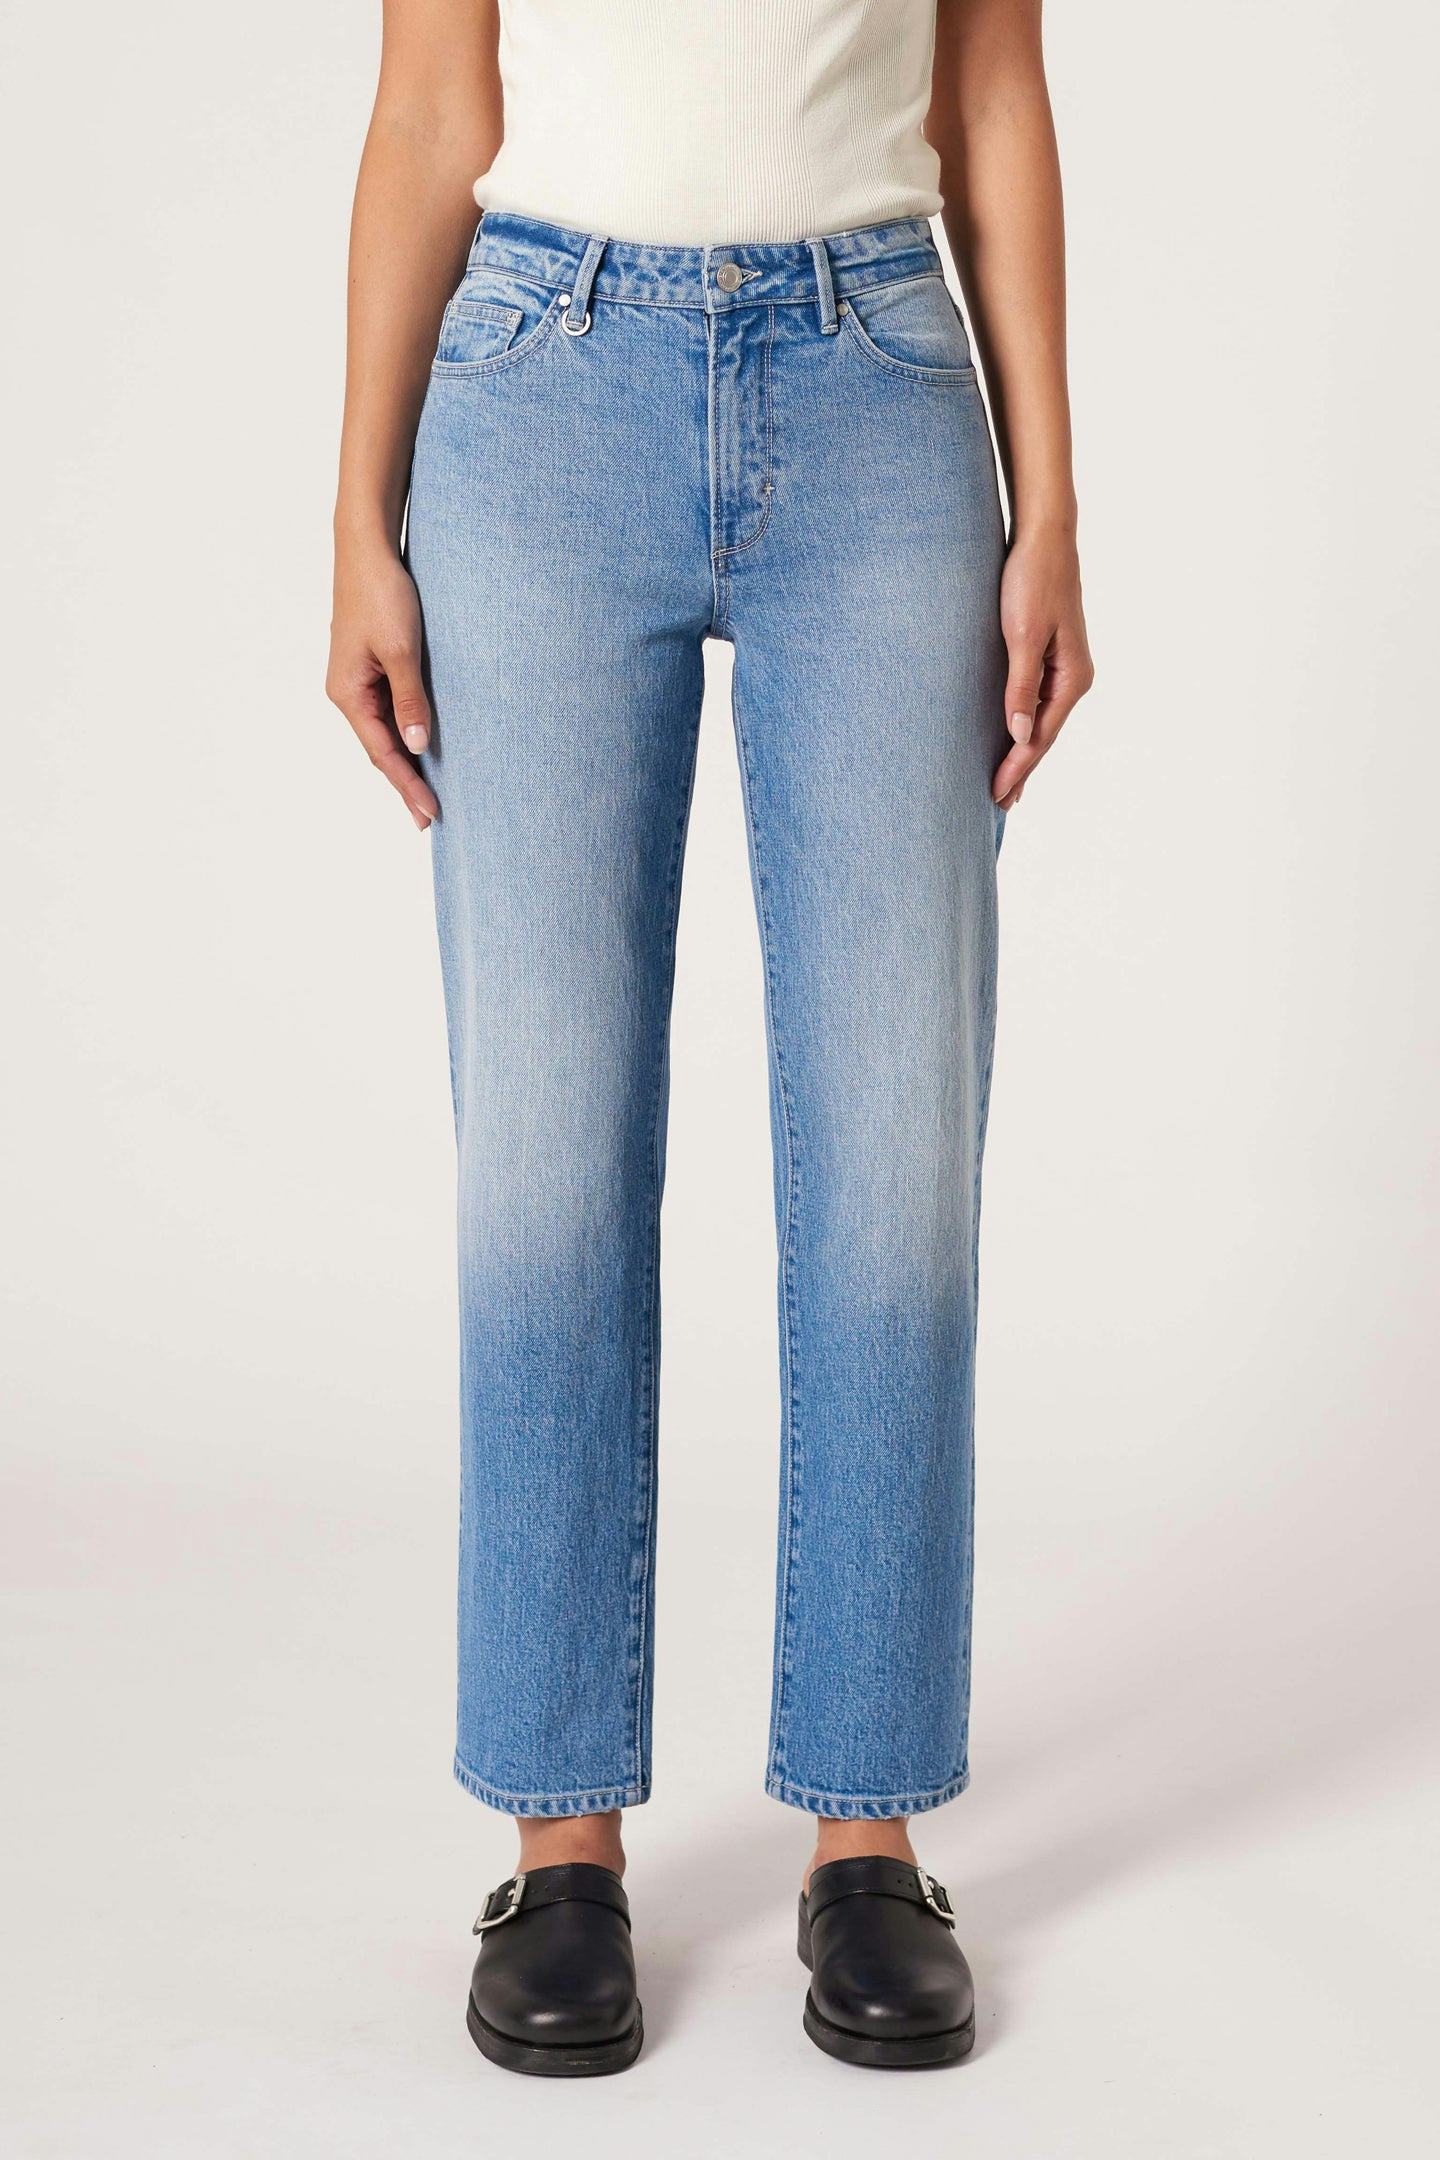 Mica Straight - Visionary Neuw mid darkblue womens-jeans 